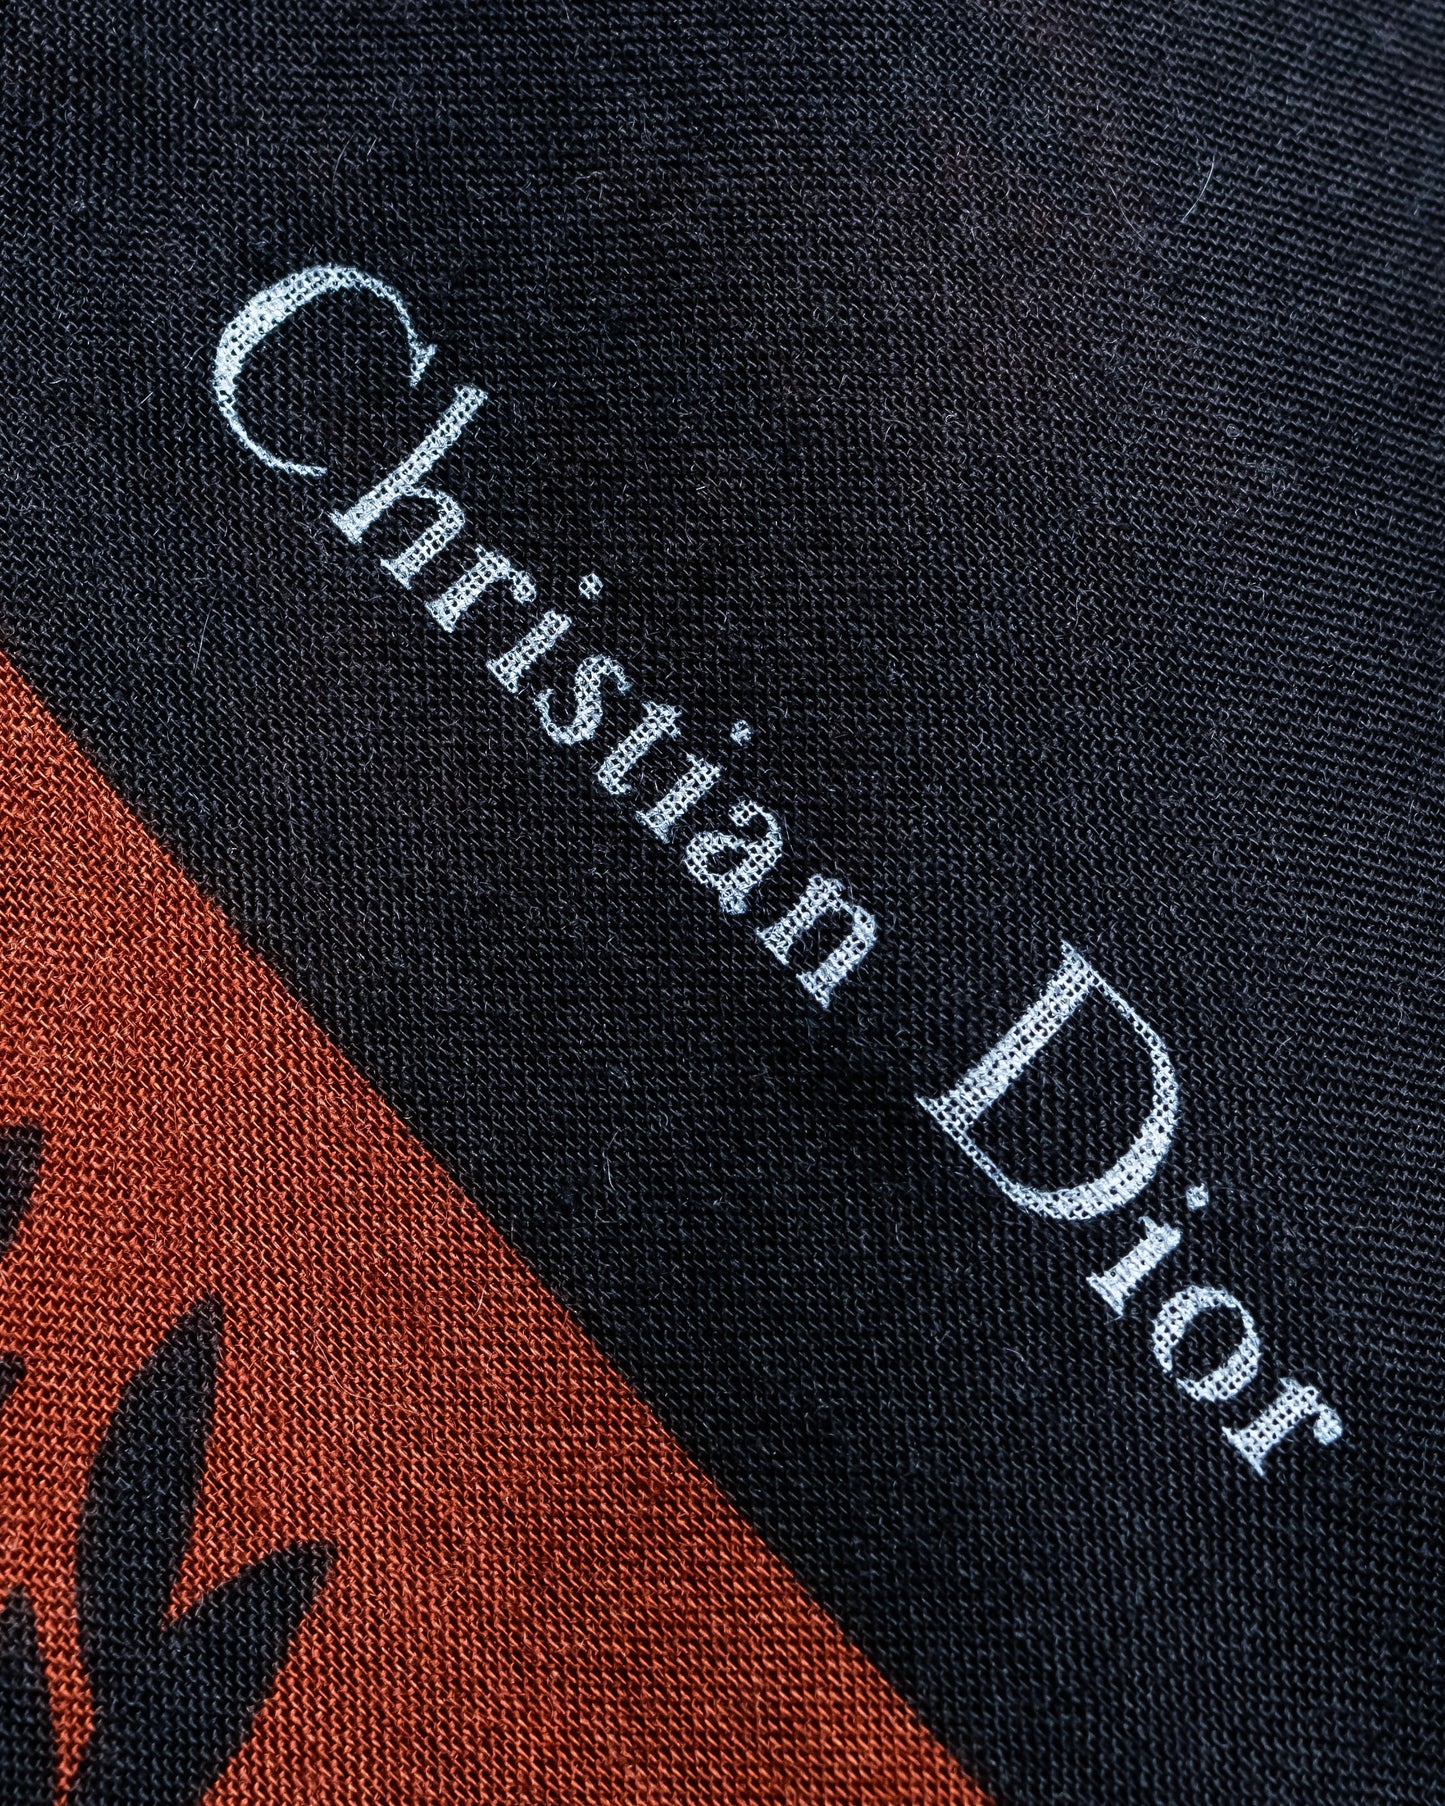 "Christian Dior" Botanical print large stole